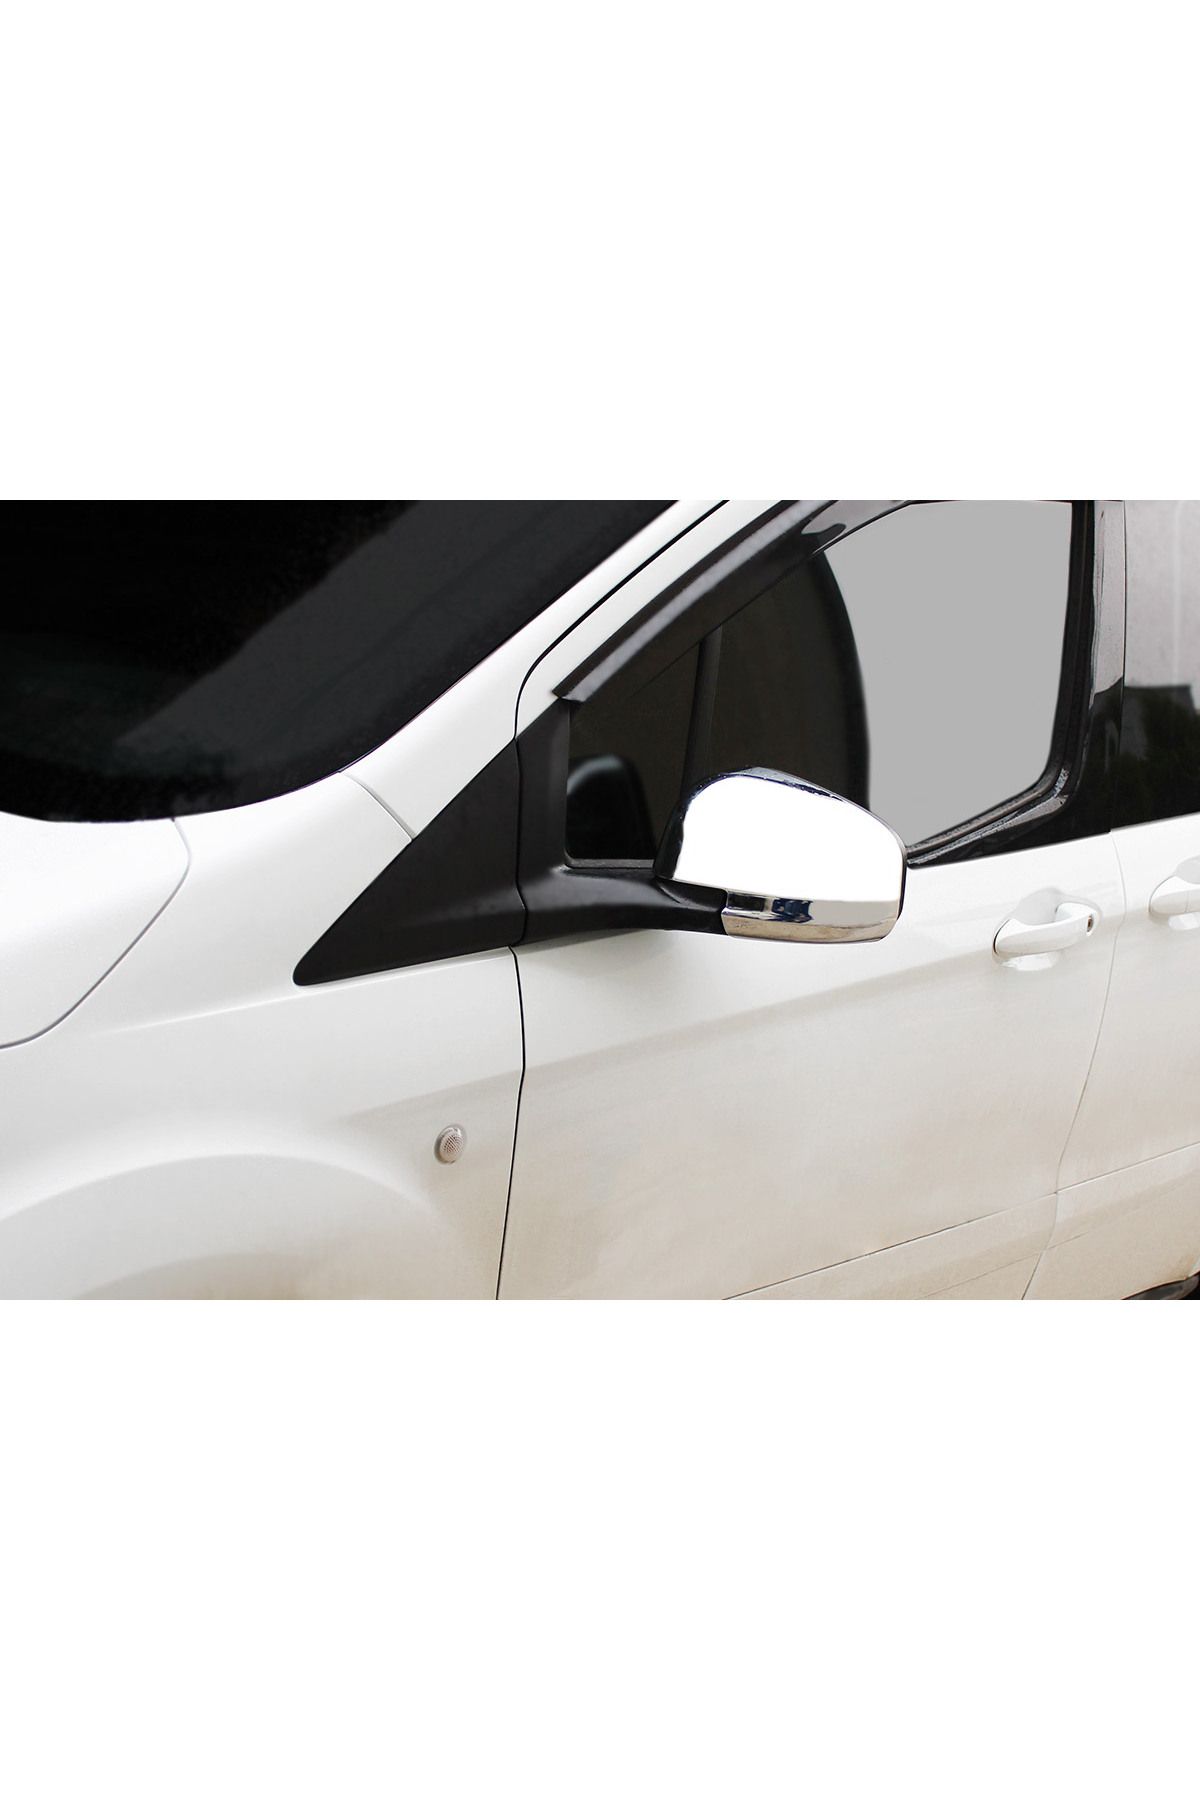 Omsa Omkar Ford Tourneo Courier Krom Ayna Kapağı Komple 2 Parça Abs 2014-2017